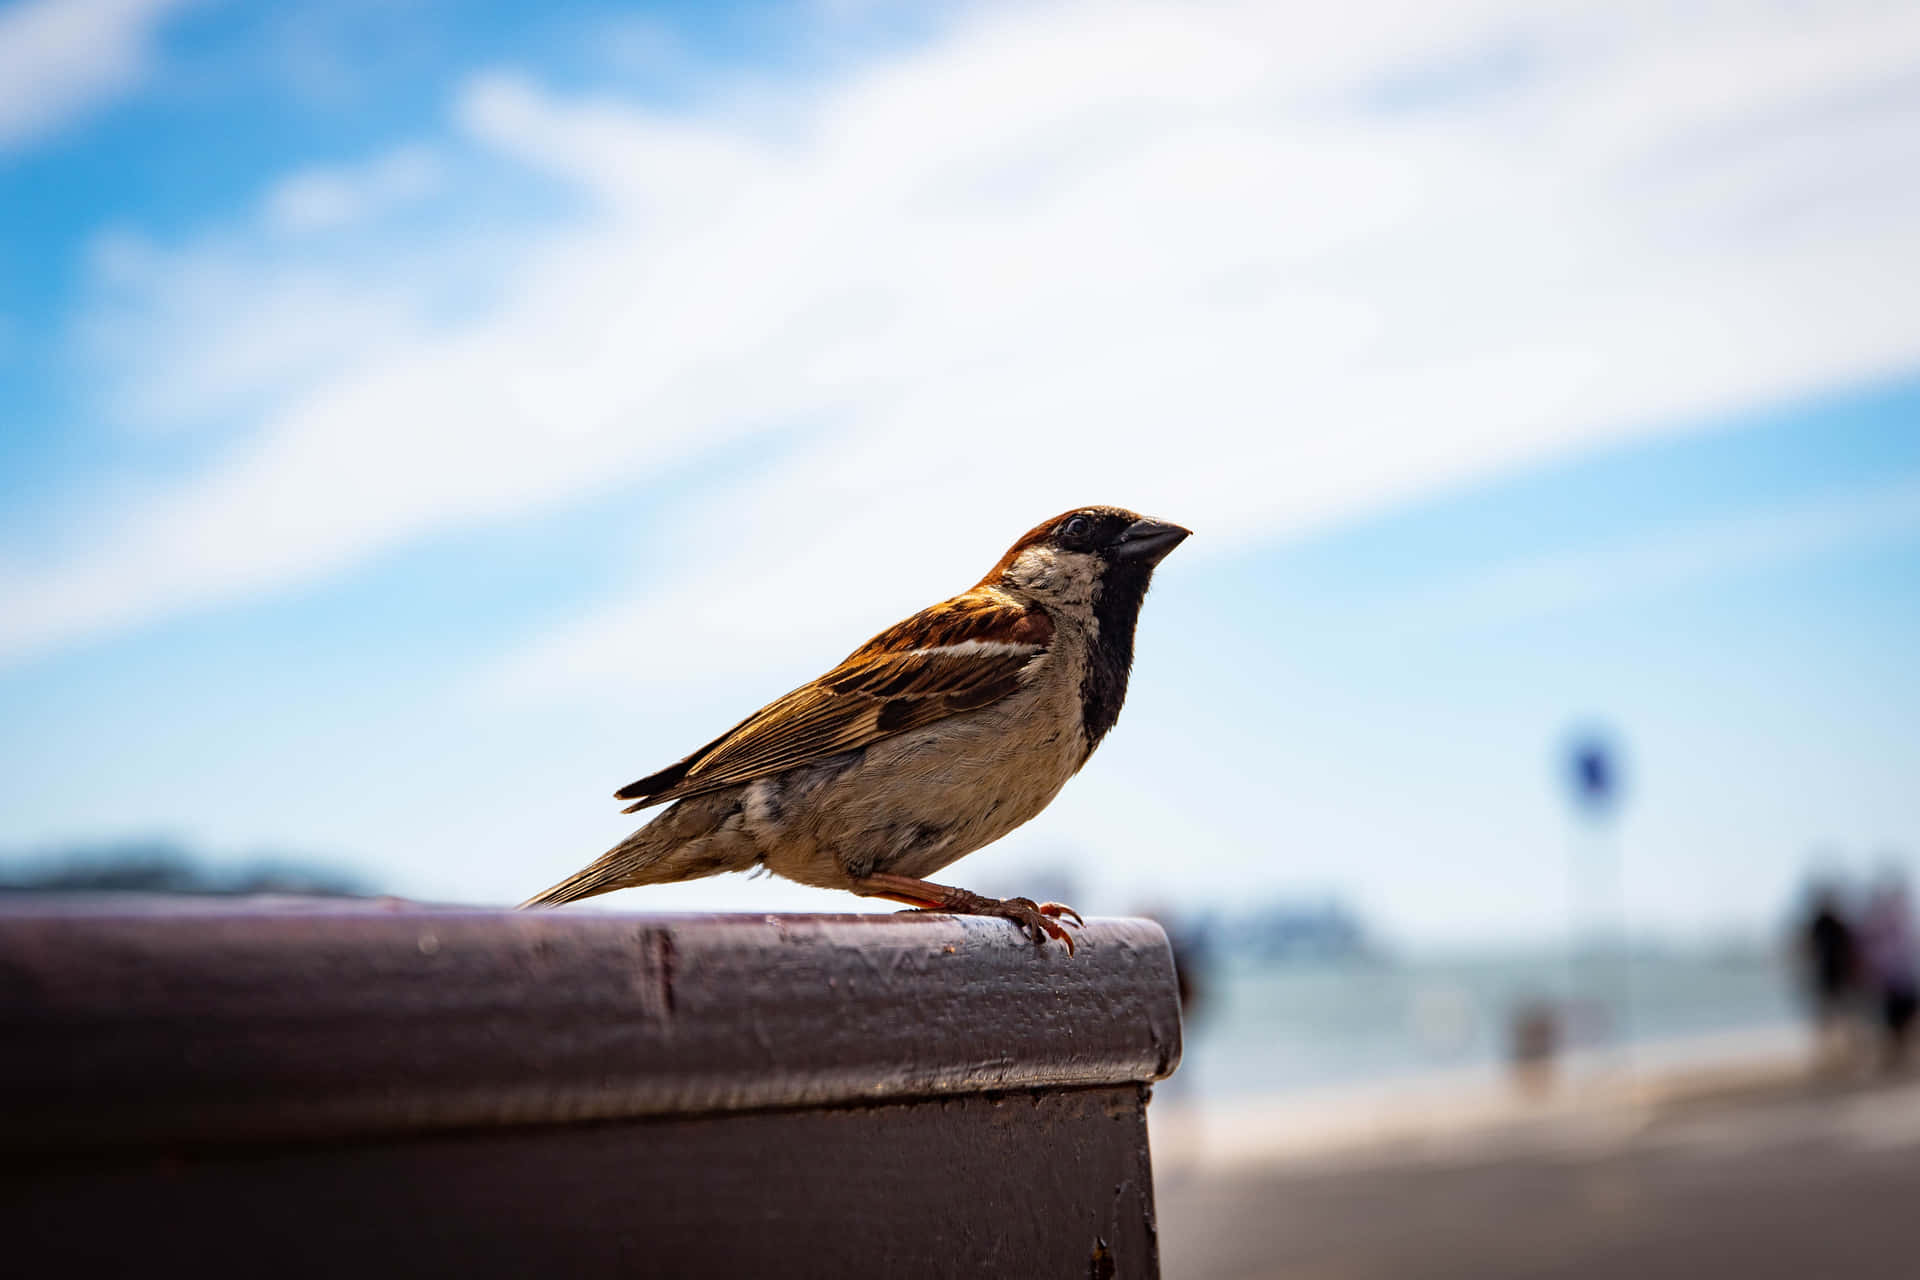 A beautiful bird - a sparrow